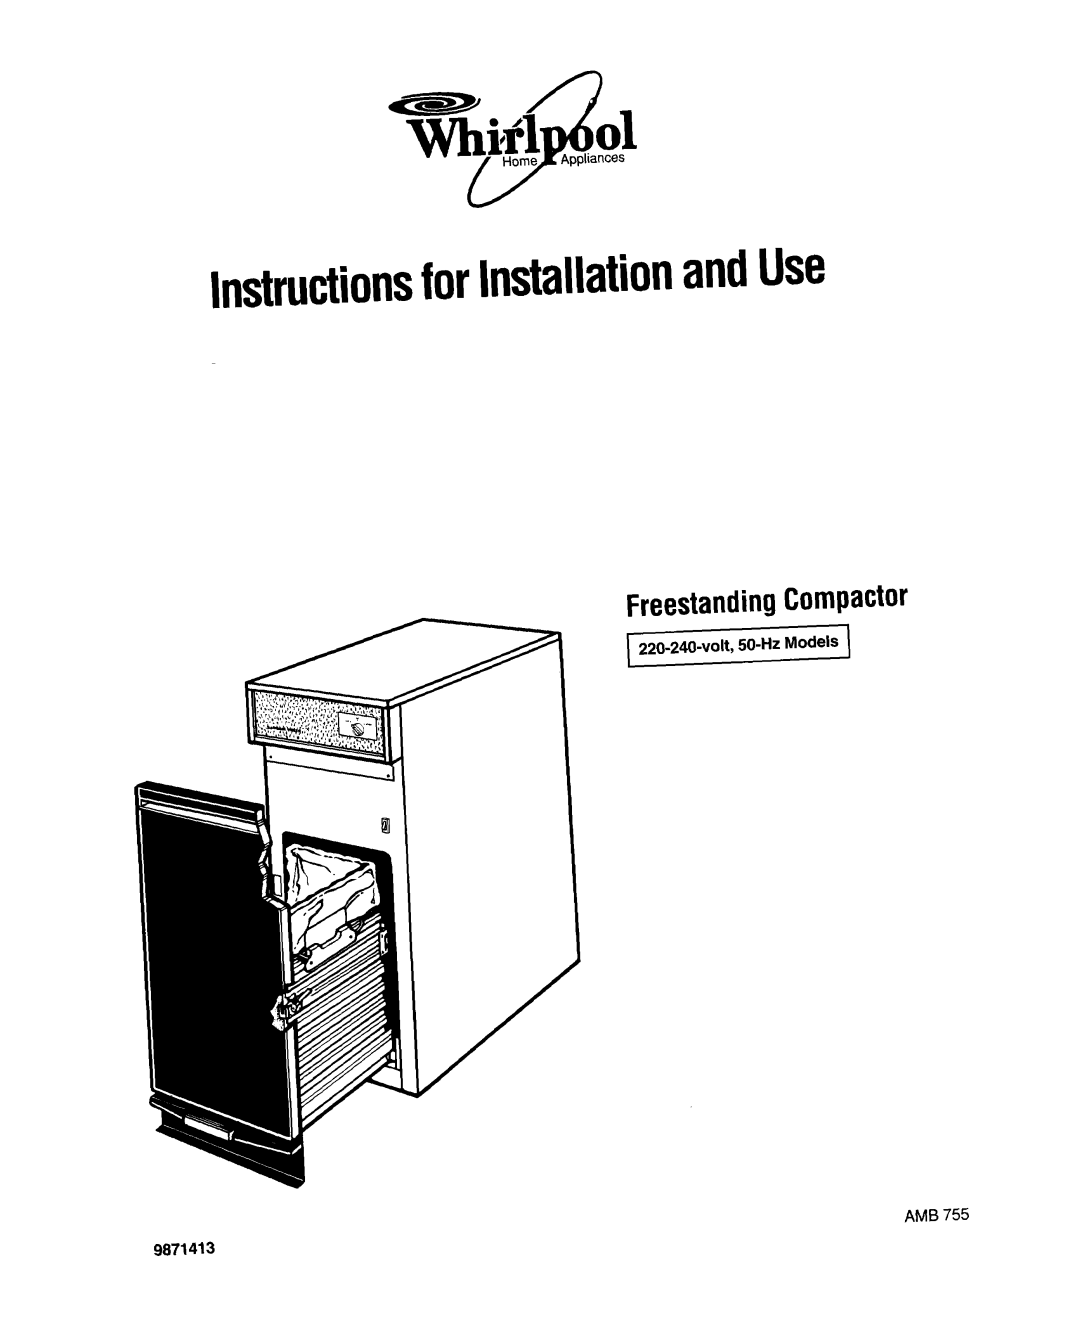 Whirlpool 50-Hz Models, 220-240~volt manual InstructionsforInstallationandUse, FreestandingCompactor 